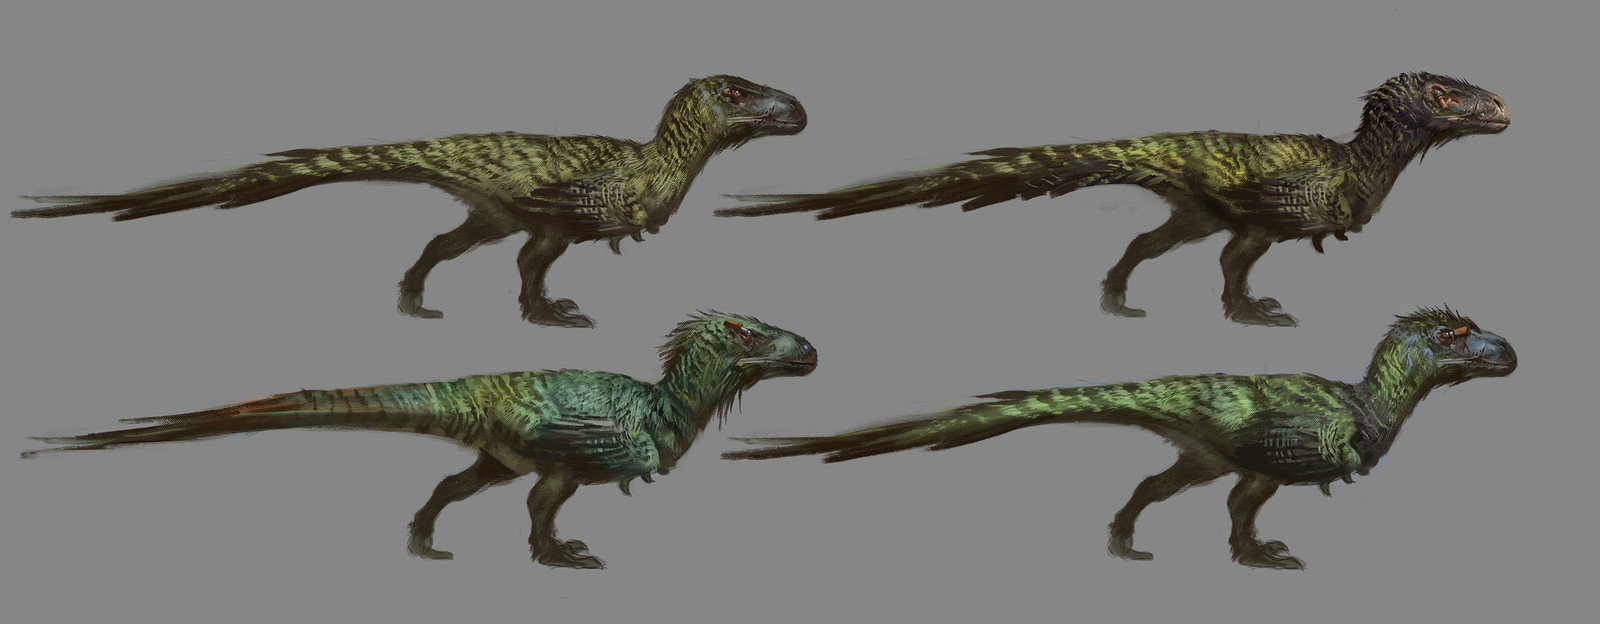 Utahraptor sketches